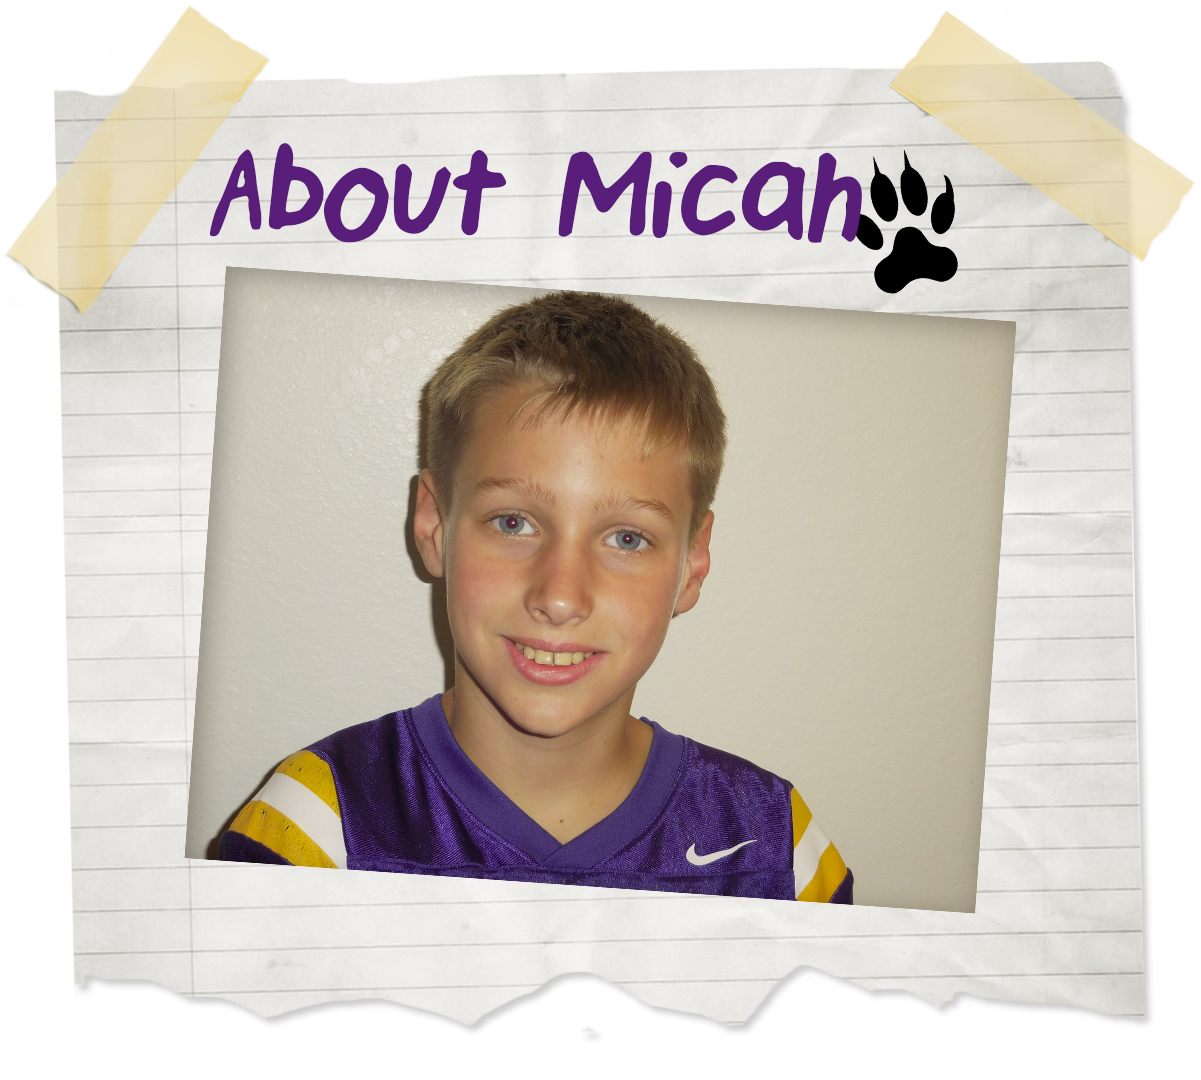 About Micah